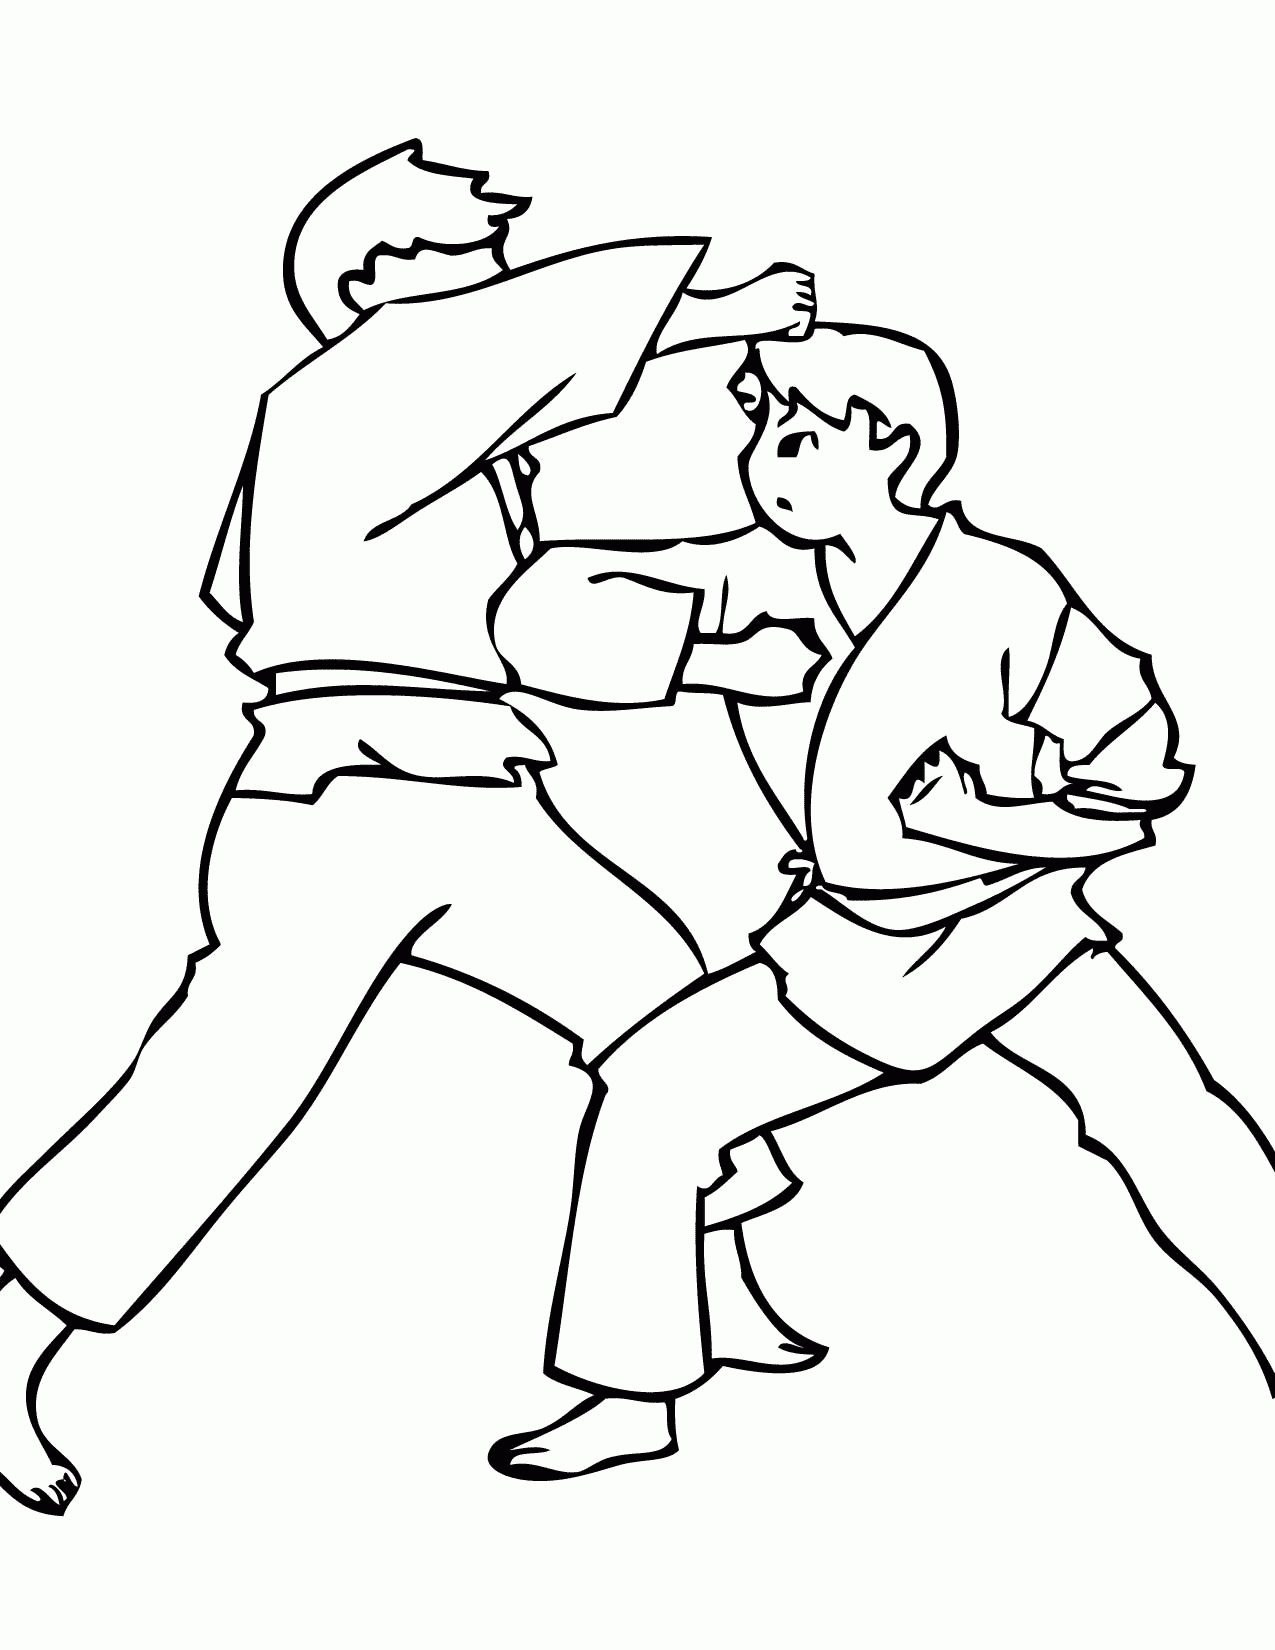 Karate Image For Kids